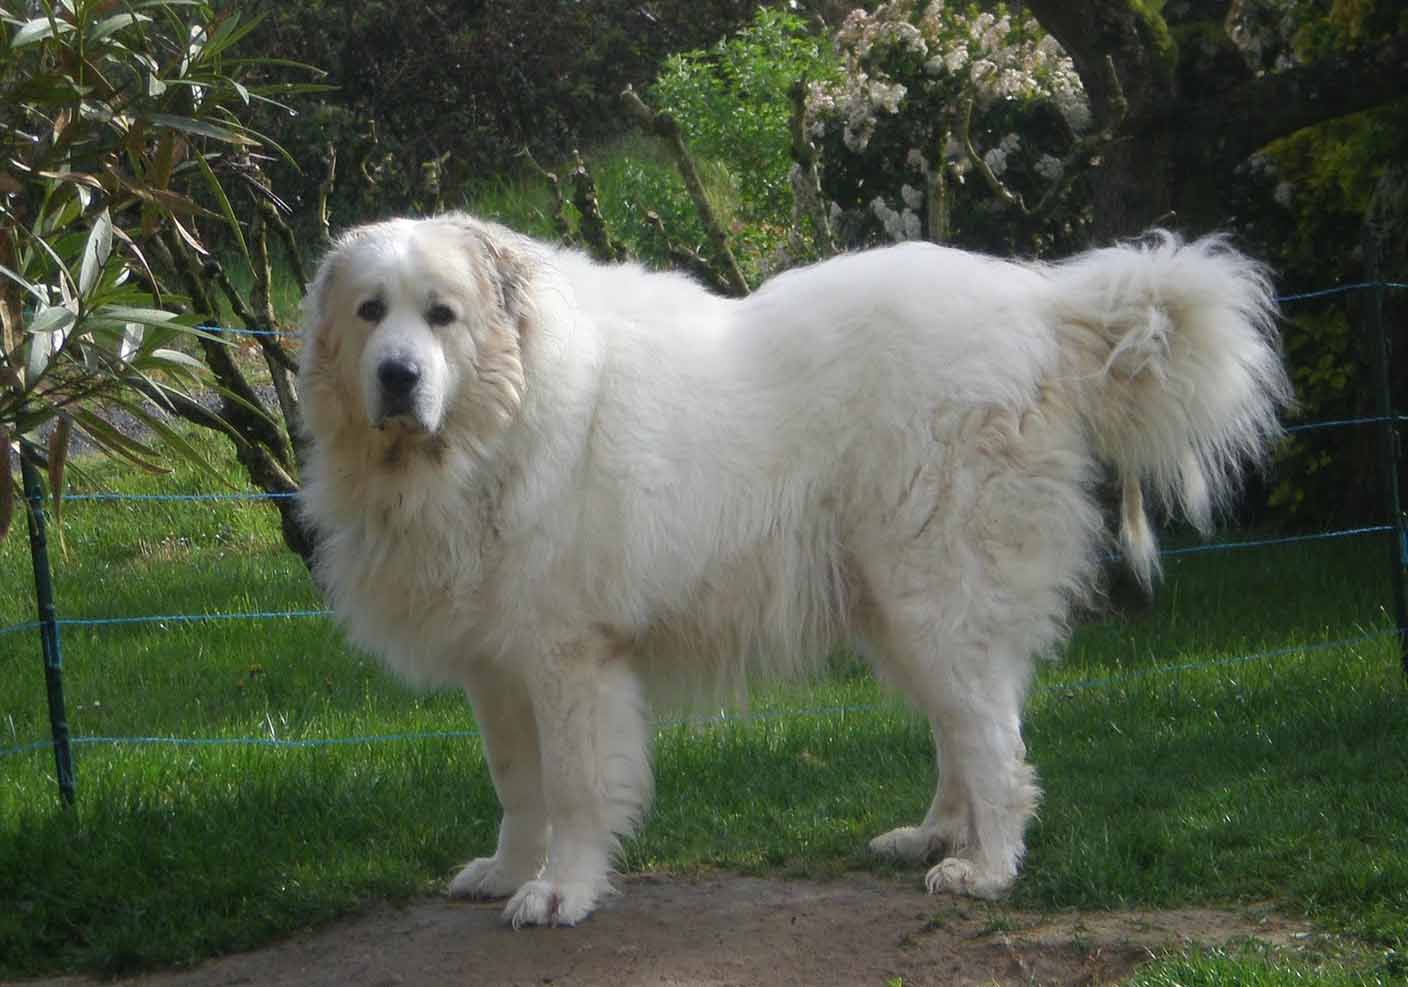 Pyrenean Mountain Dog